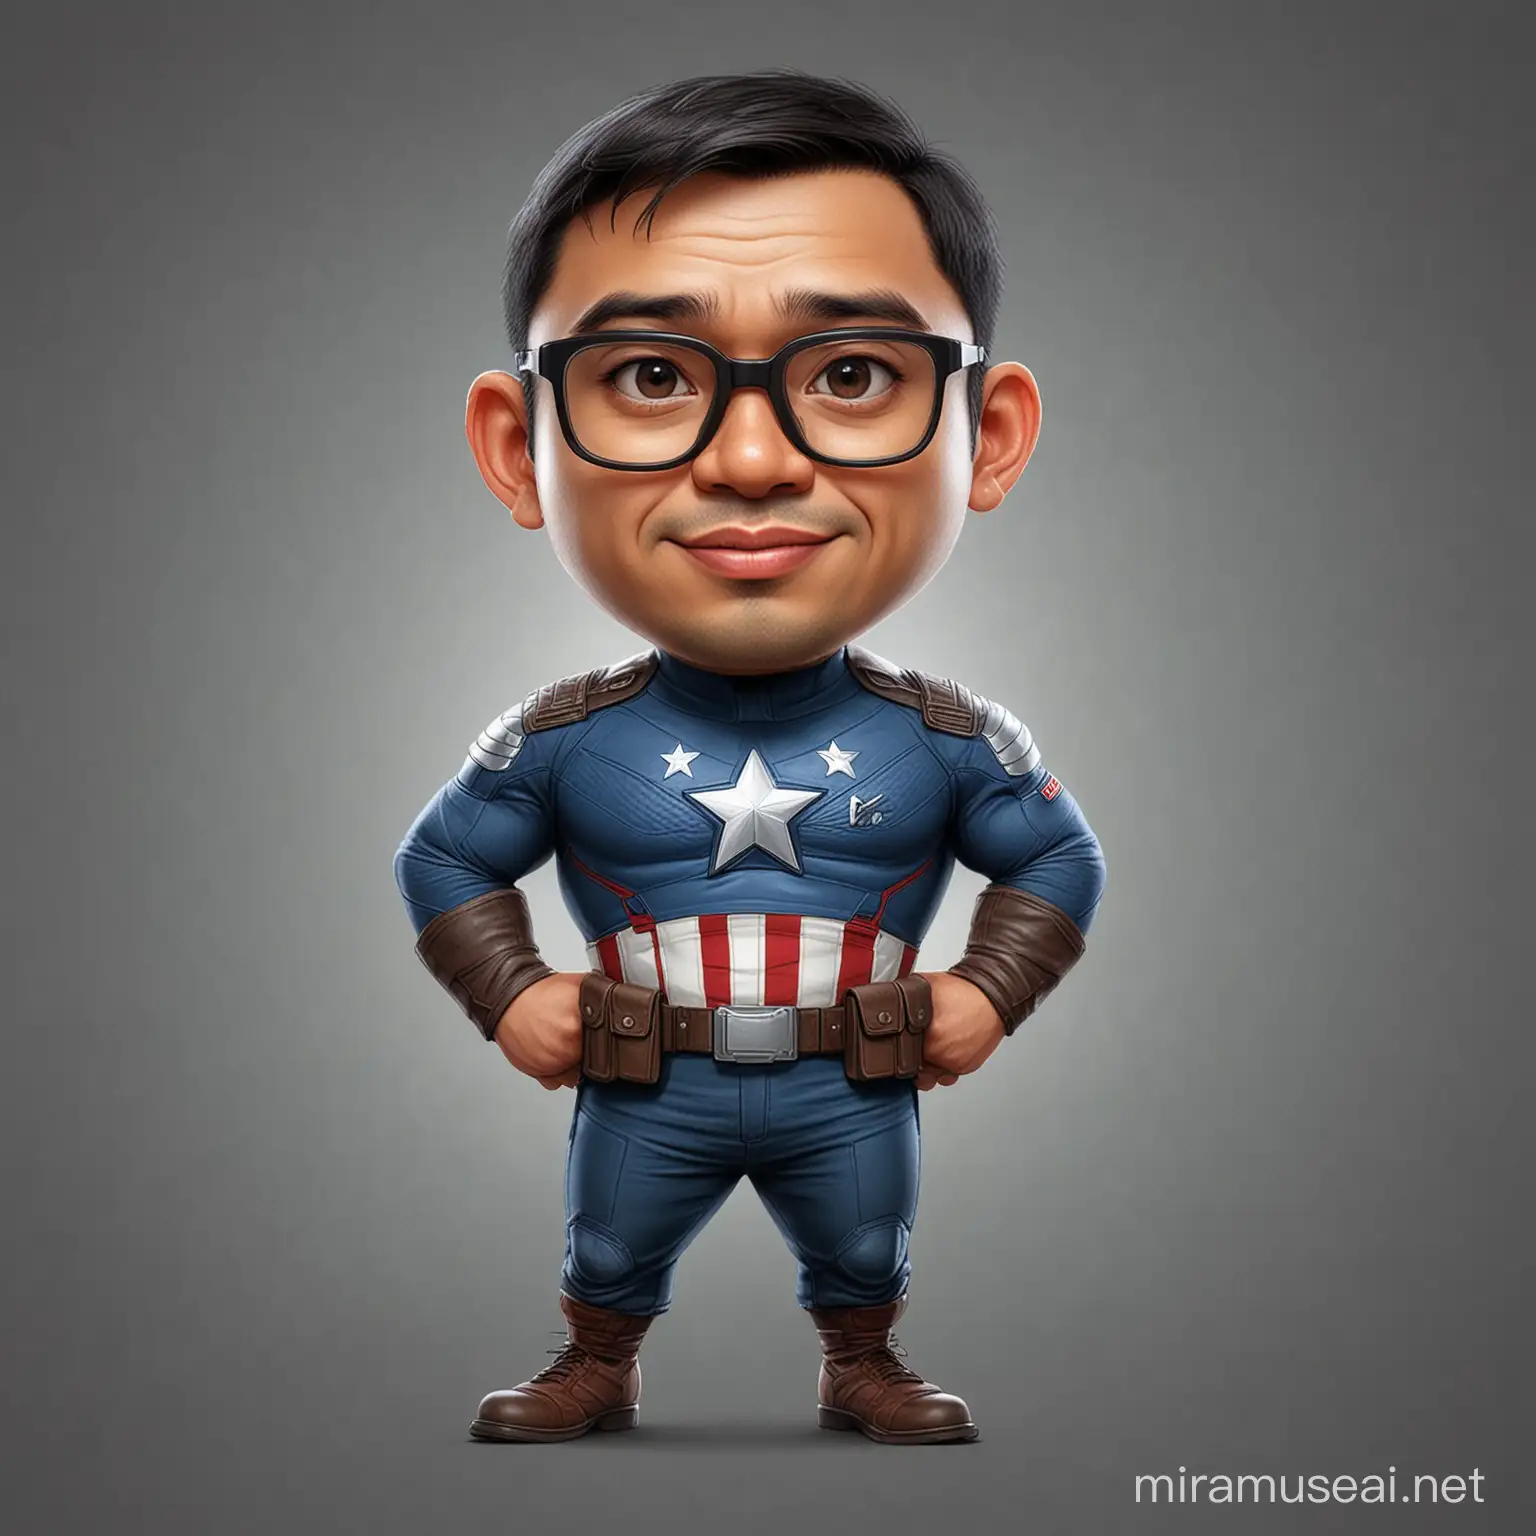 Whimsical Full Body Caricature Portrait Indonesian Man in Captain America Costume